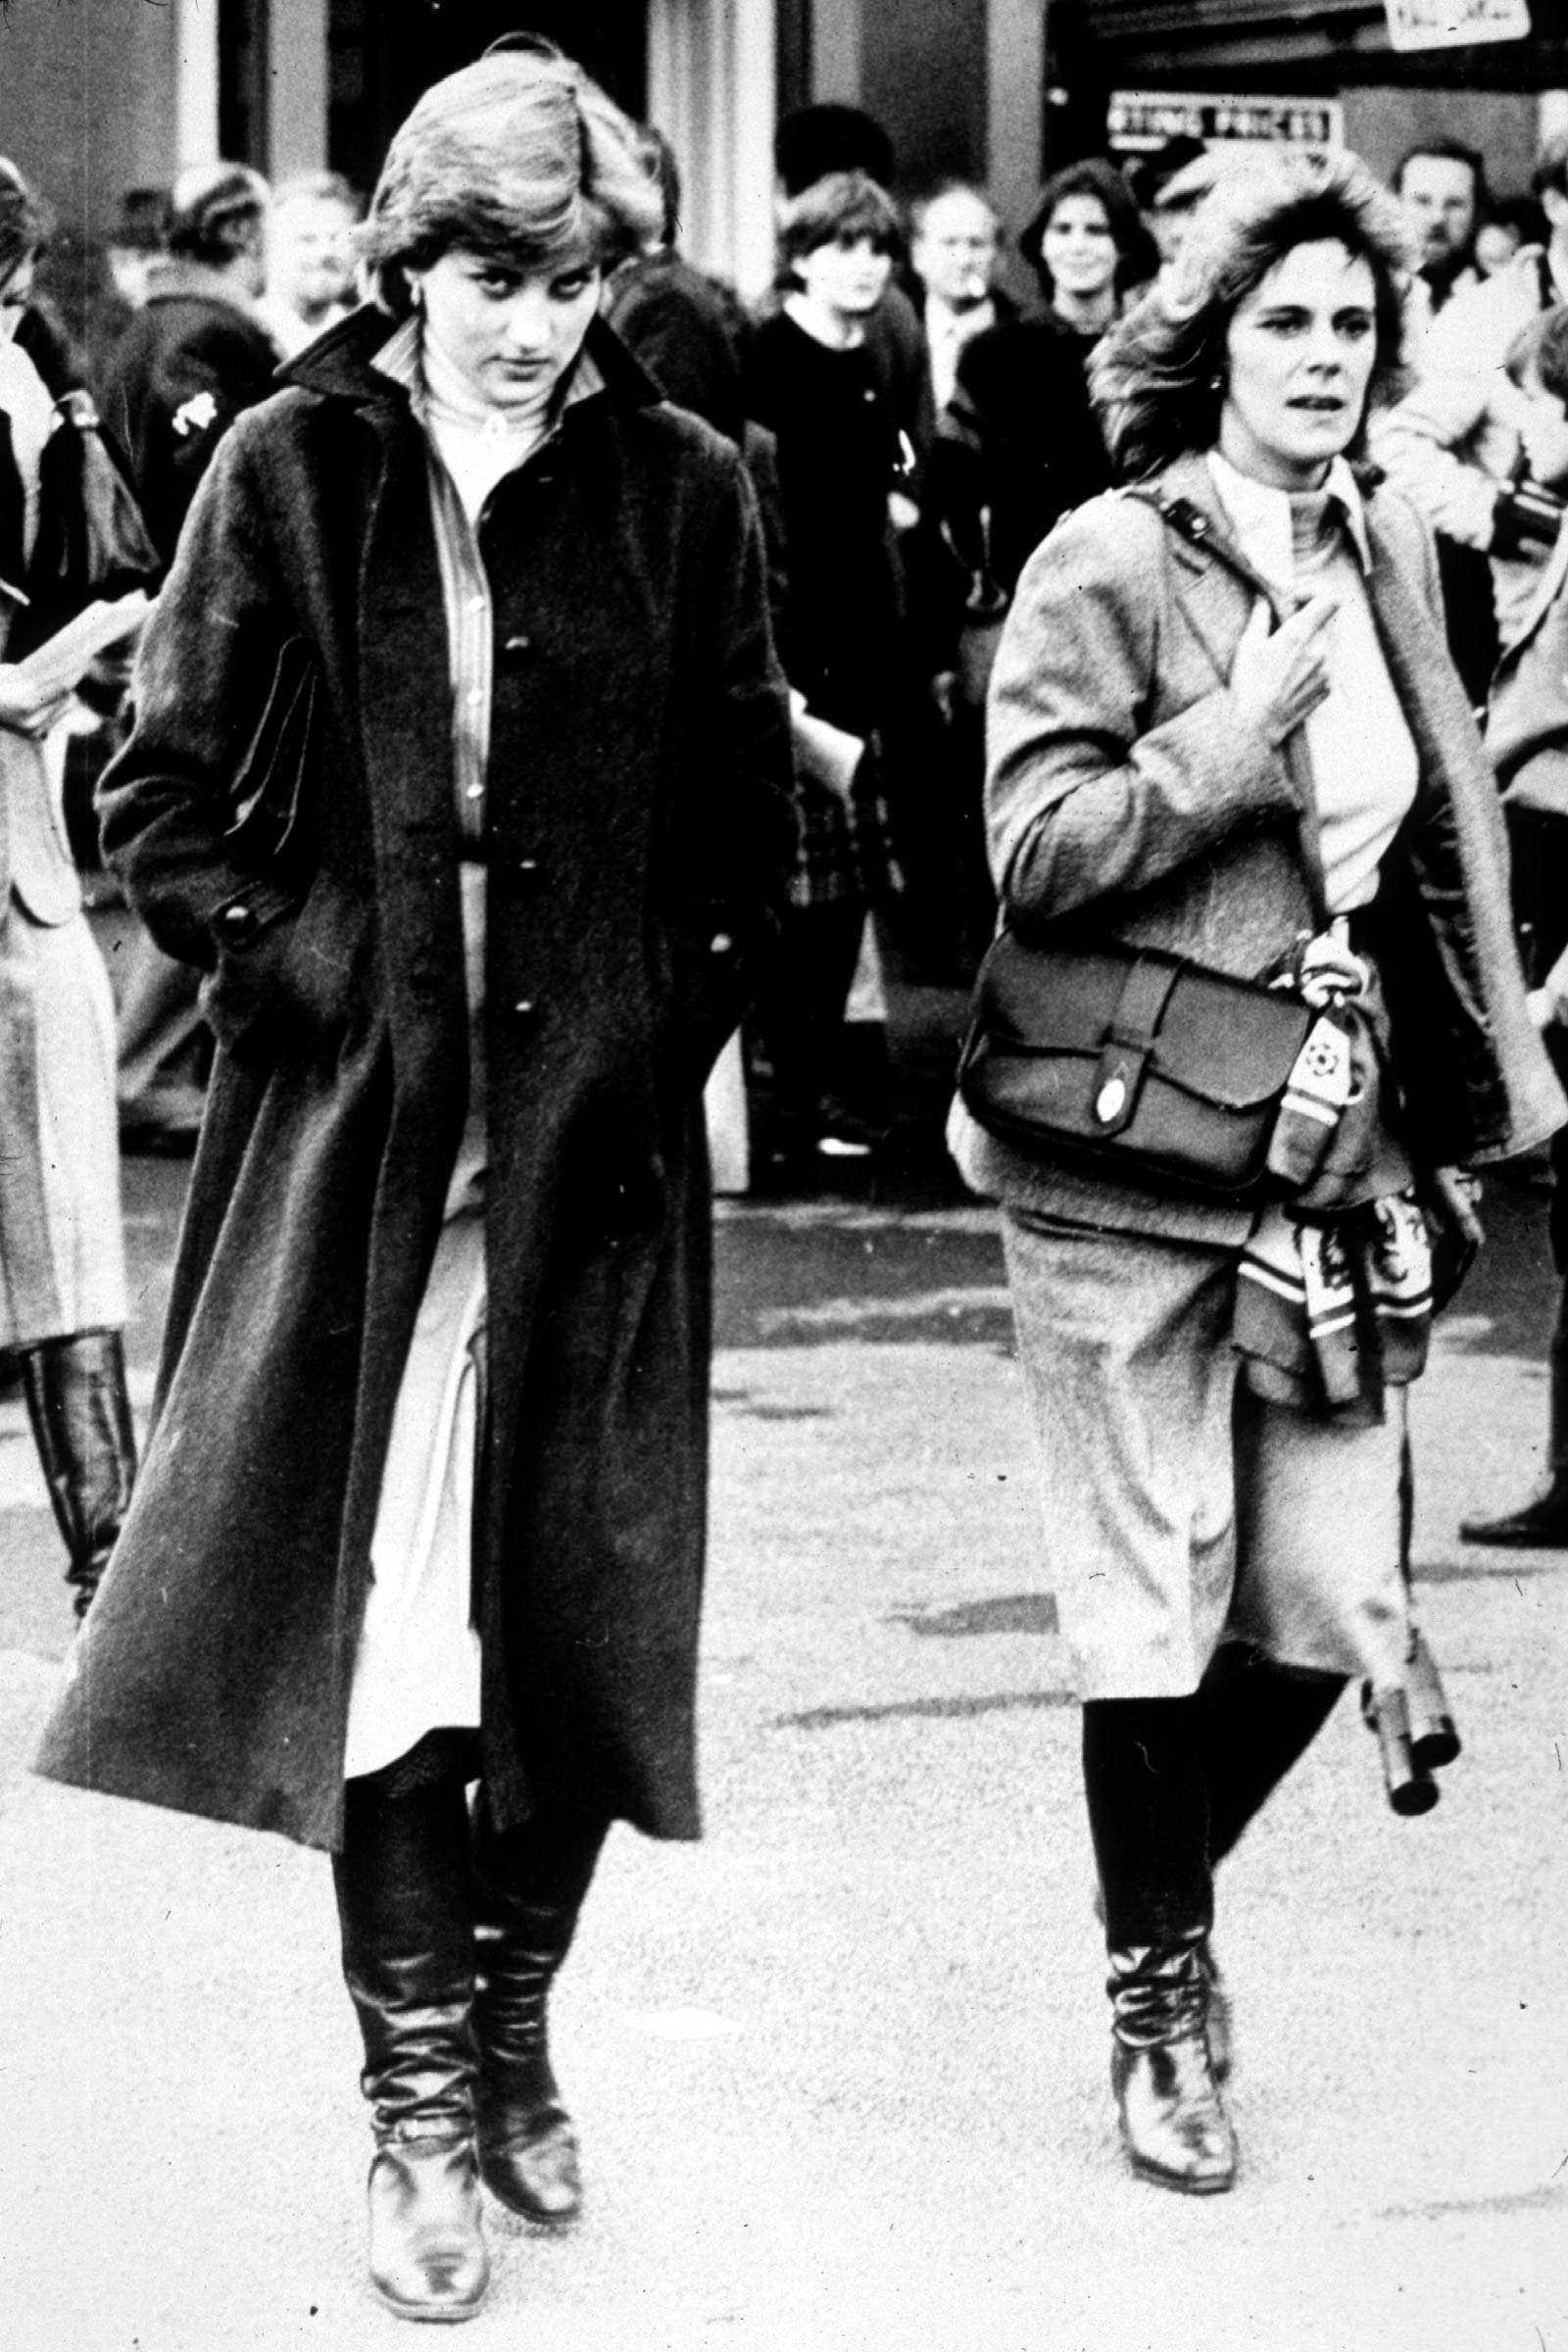 Lady Diana Spencer (later Princess Diana) and Camilla Parker Bowles